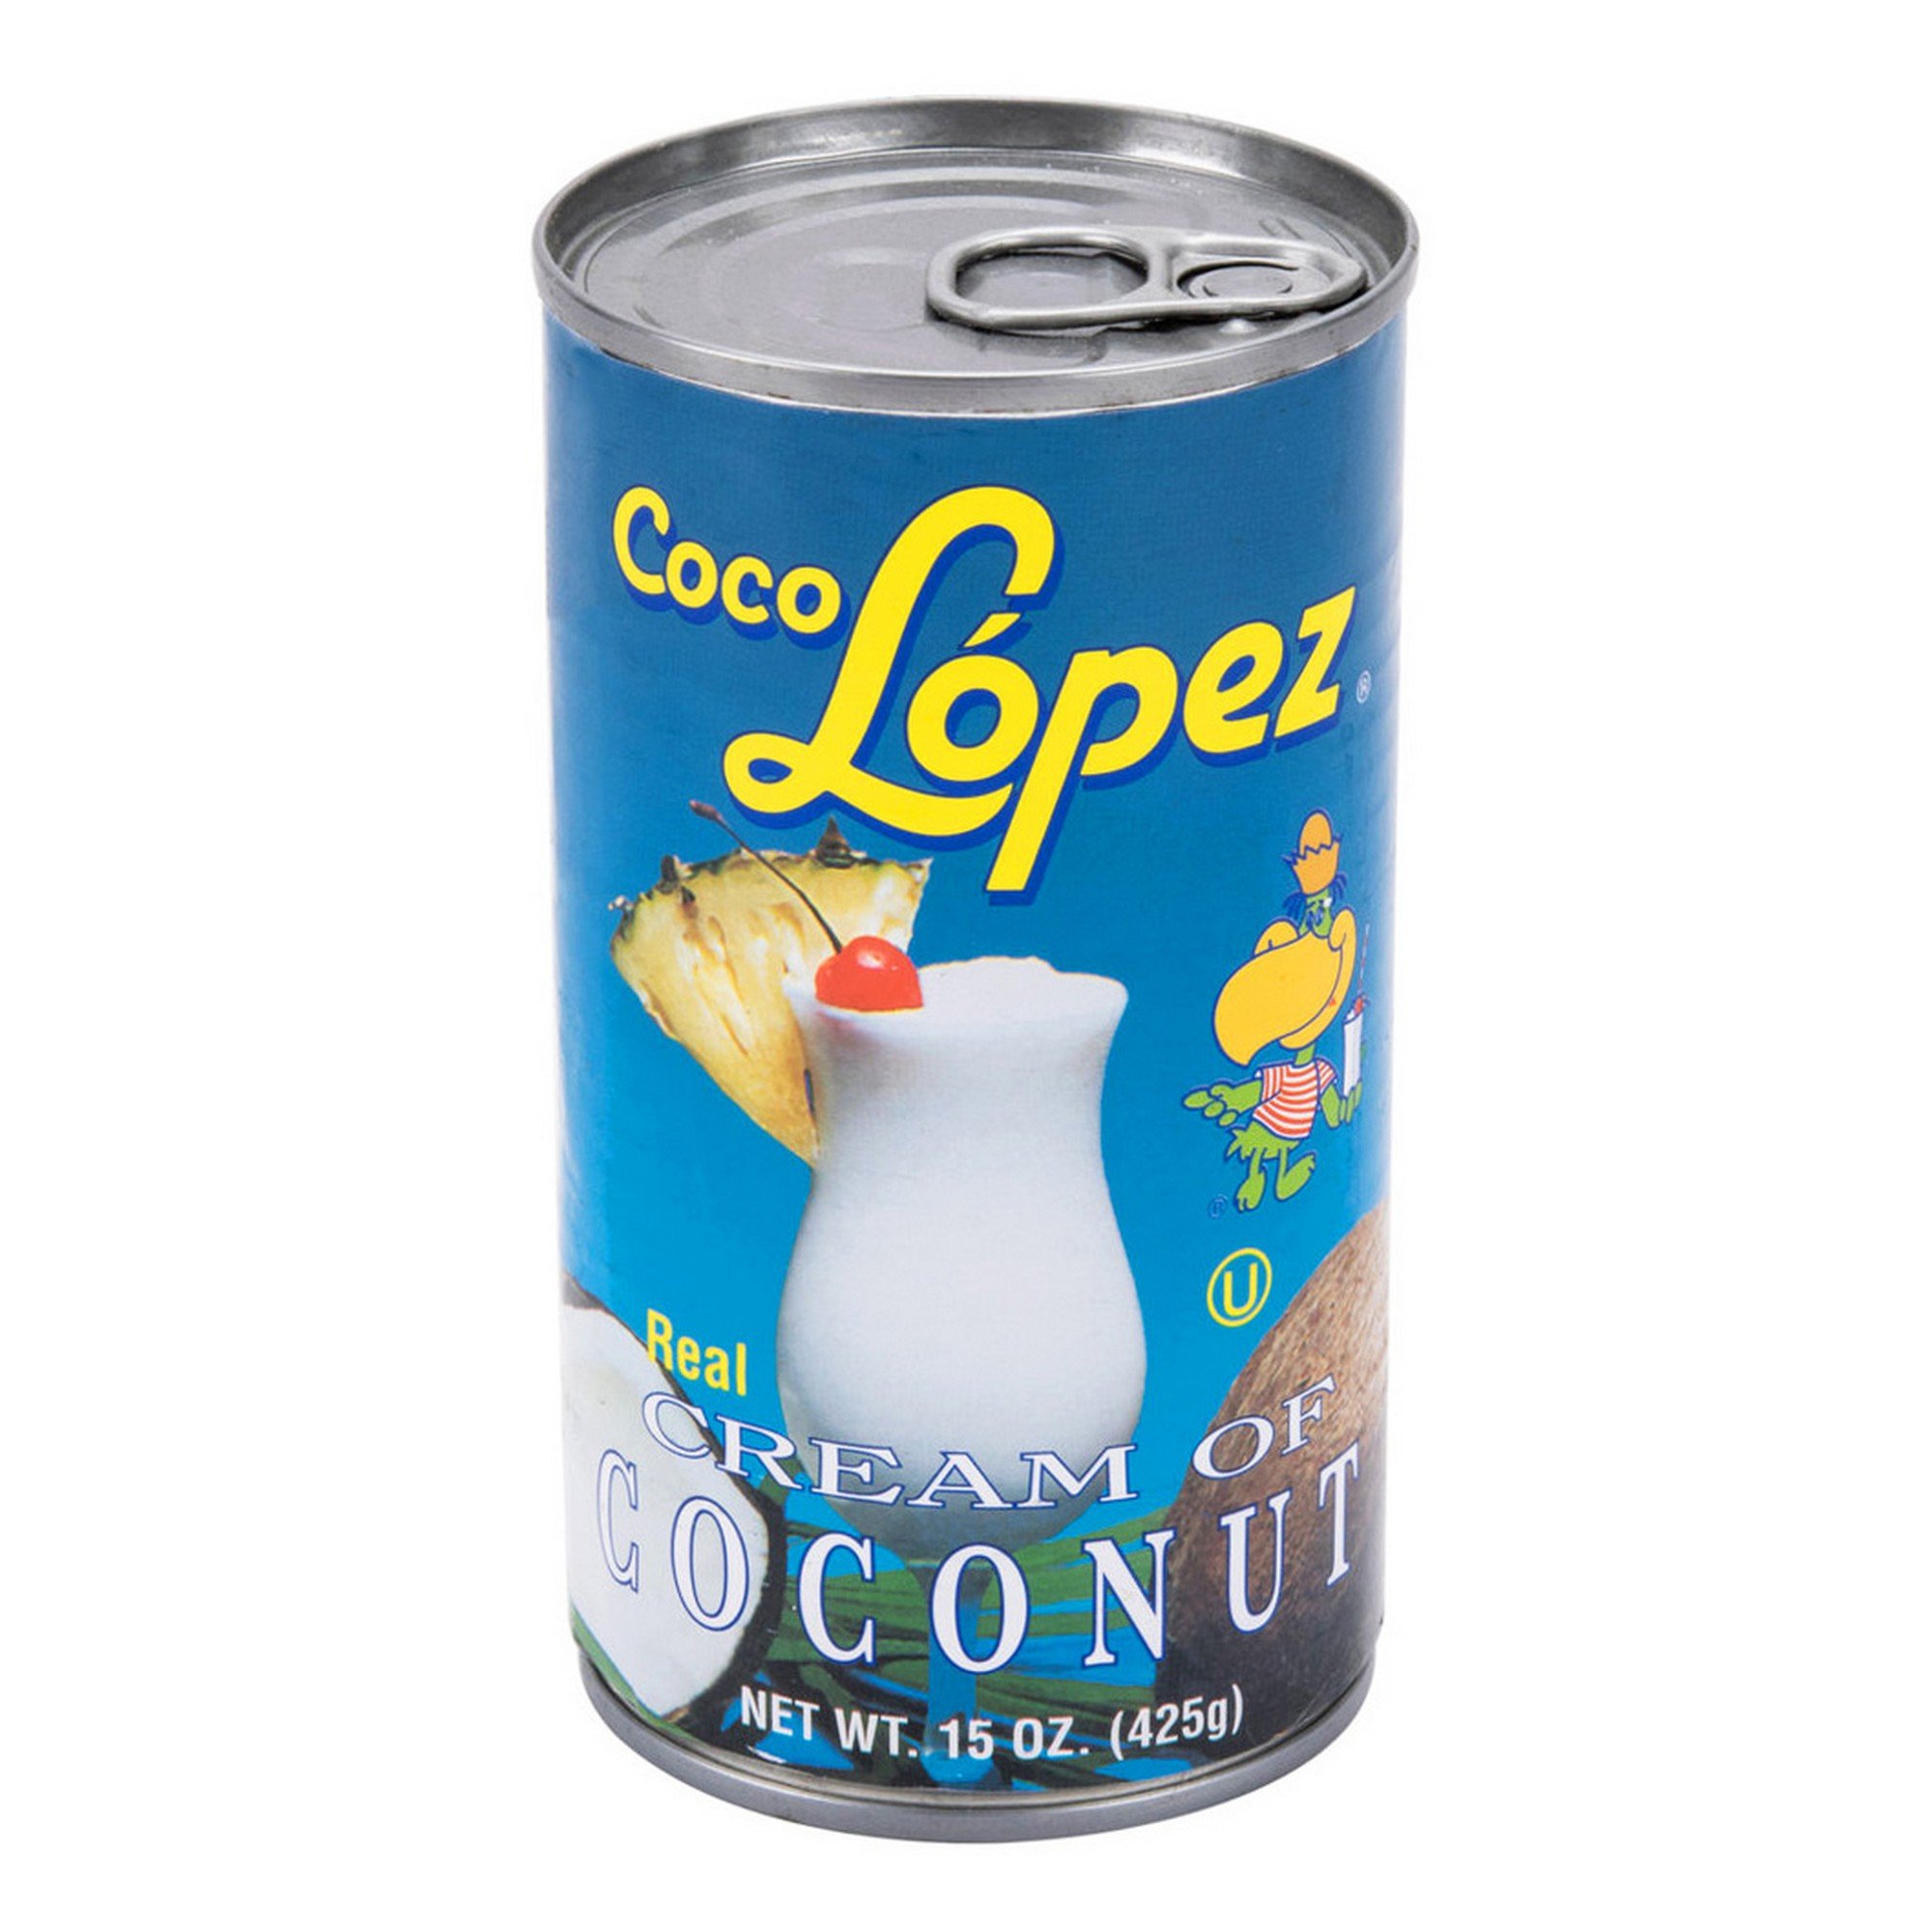 Creme of coconut hvit 425g